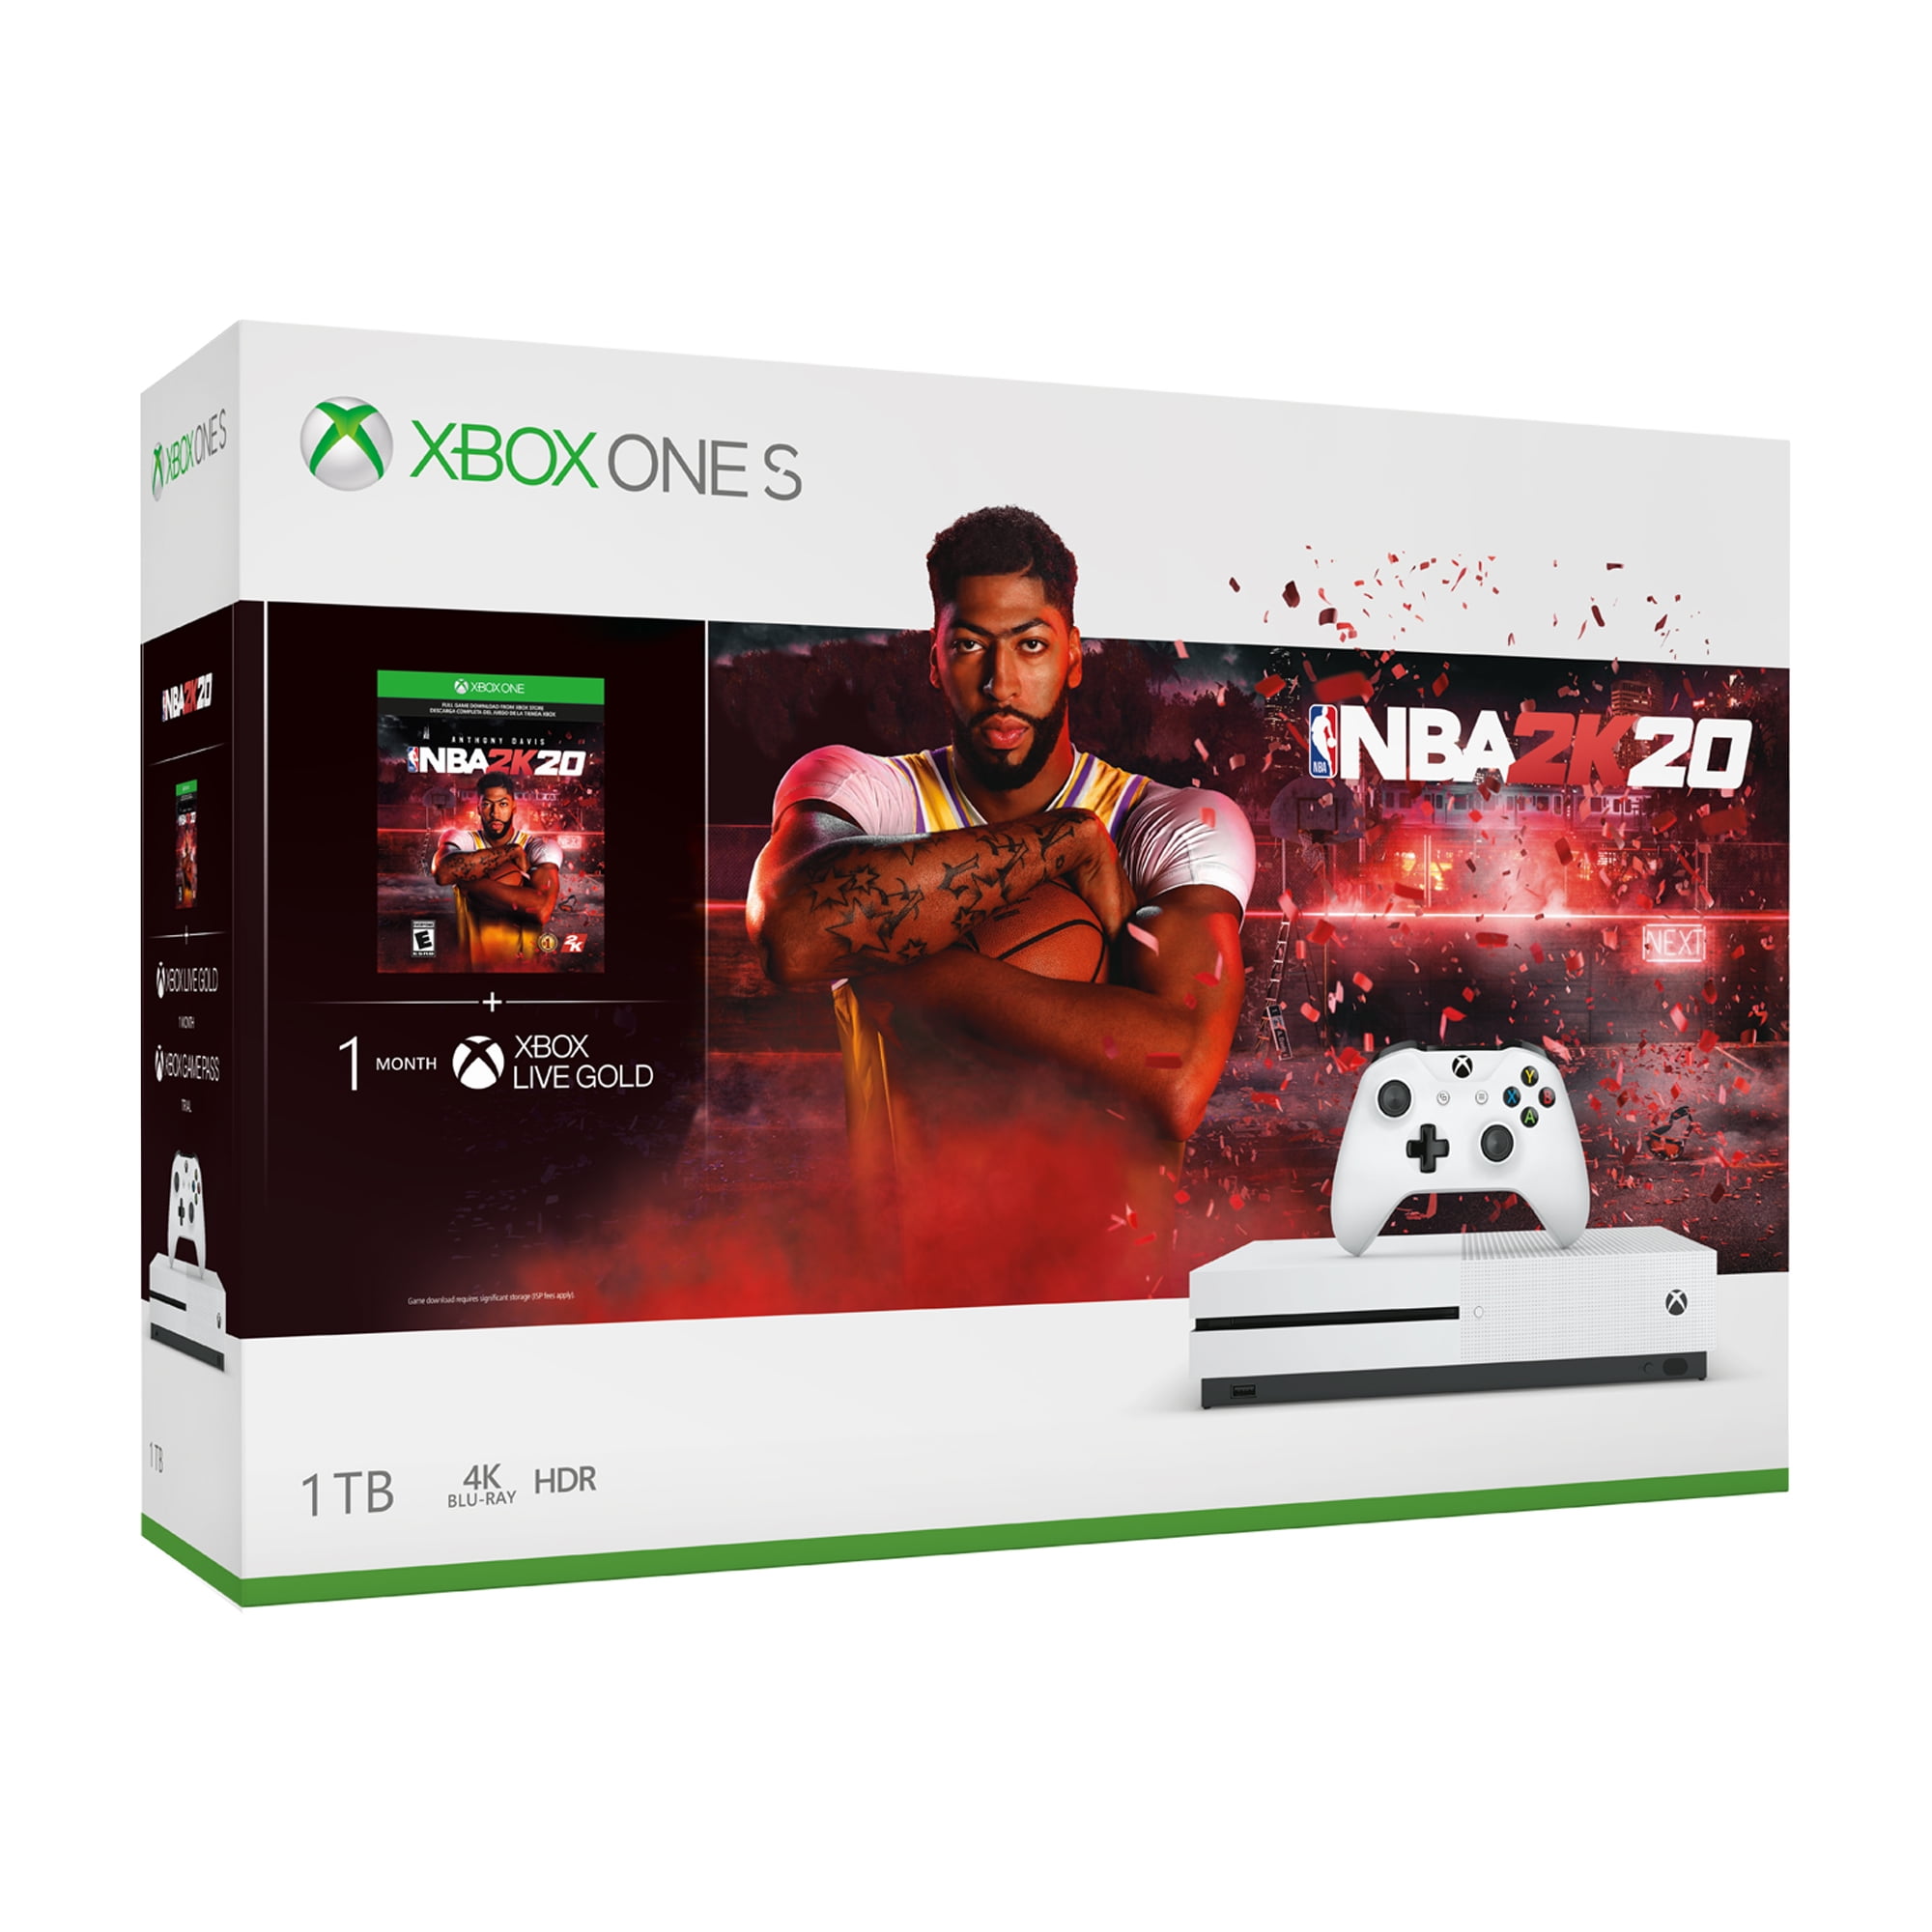 wet Christian Misbruik Microsoft Xbox One S 1TB NBA 2k20 Bundle, White, 234-00998 - Walmart.com